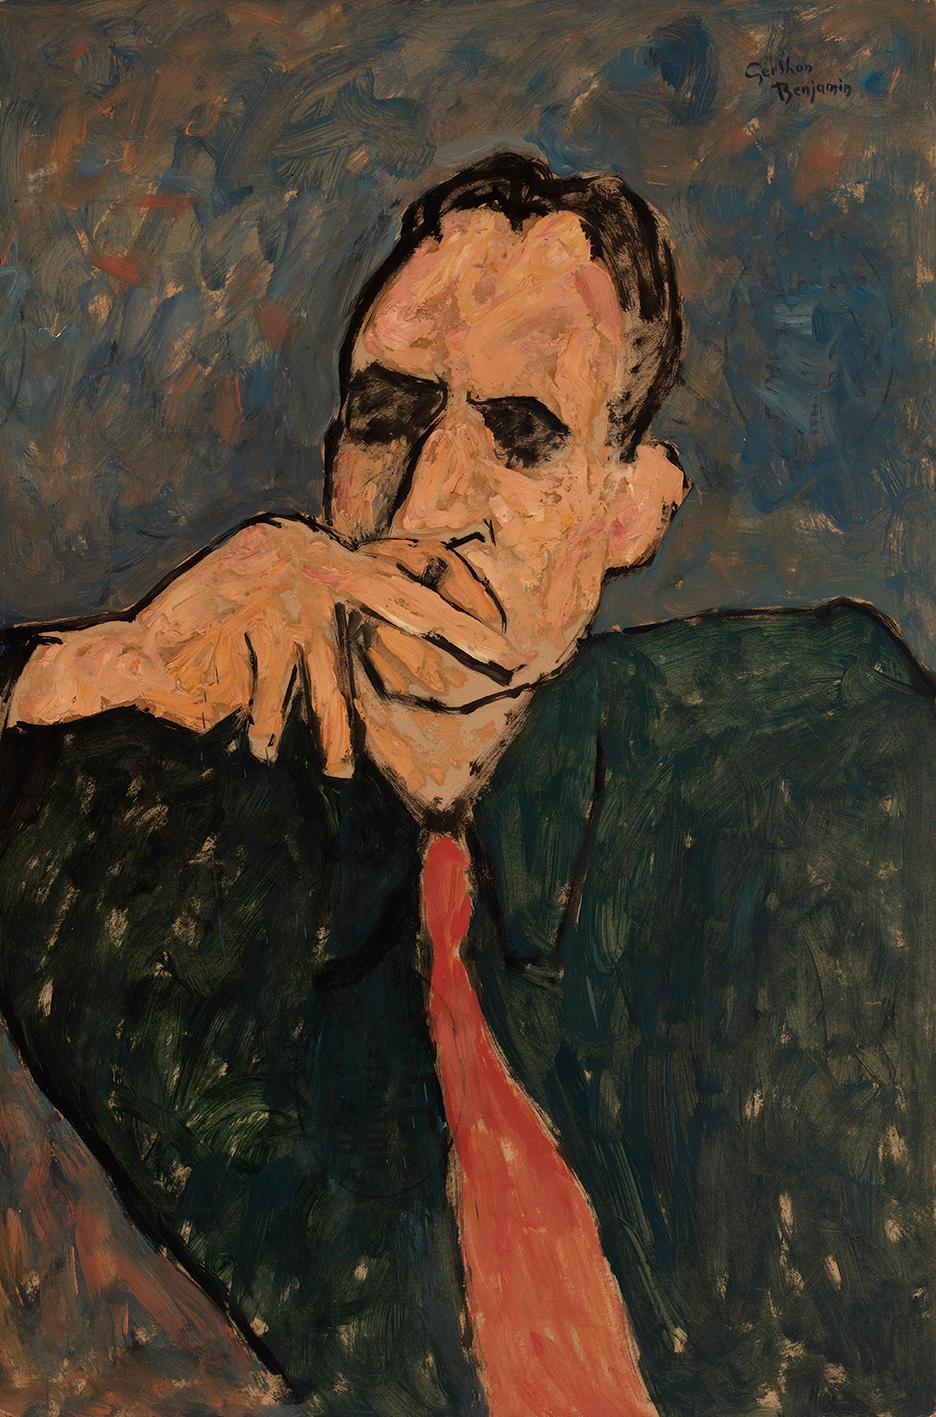 Gershon Benjamin Portrait Painting - "The Thinker"